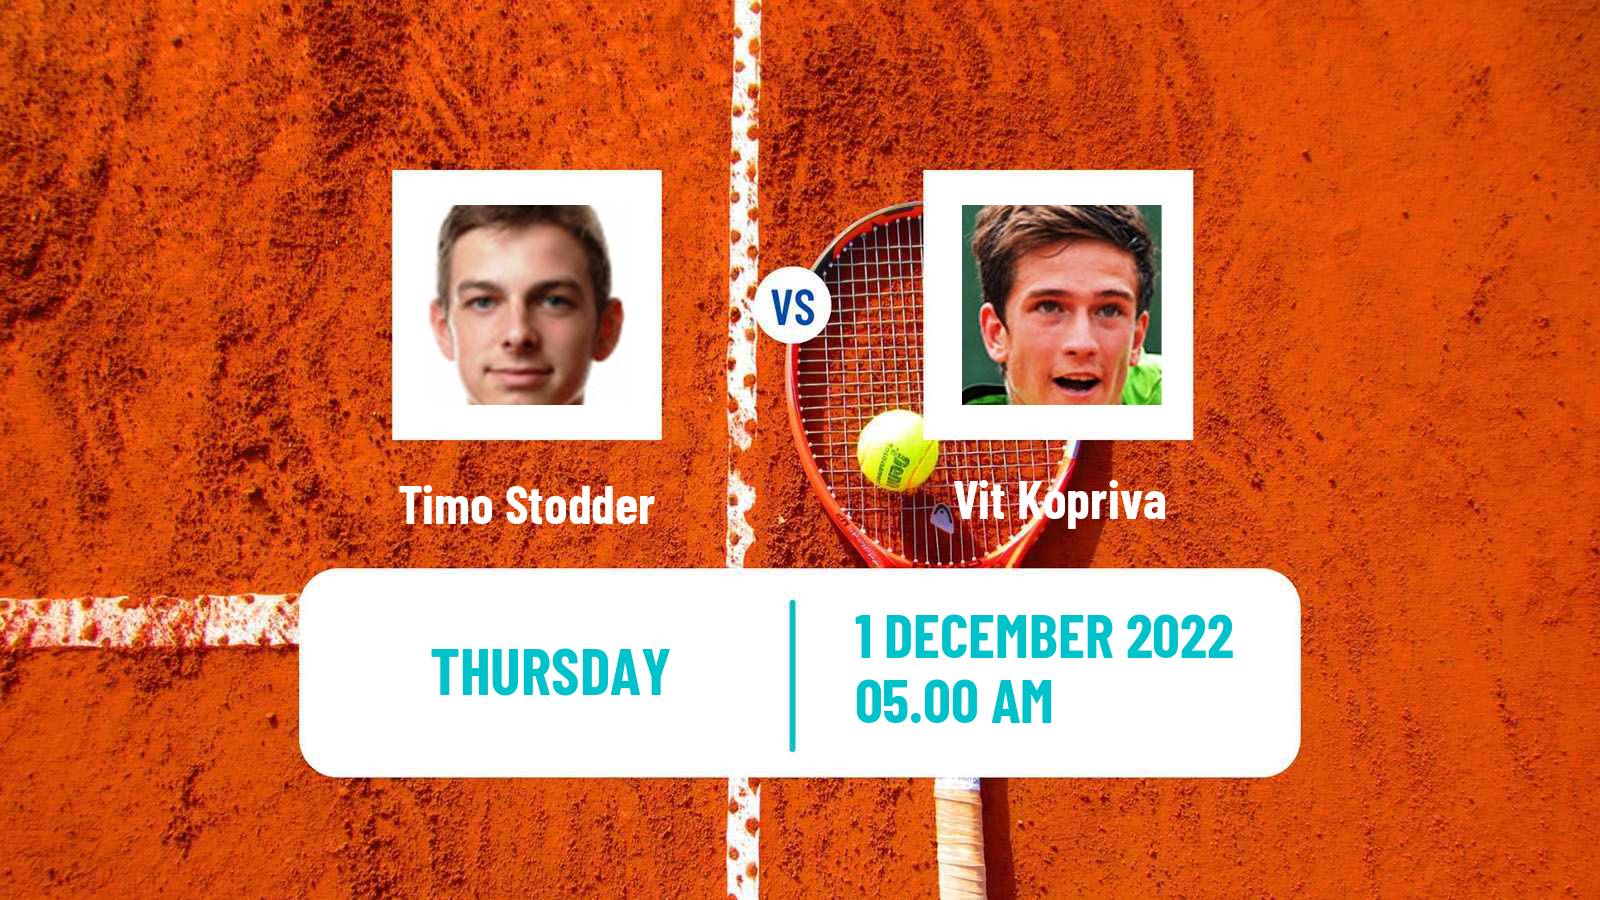 Tennis ATP Challenger Timo Stodder - Vit Kopriva